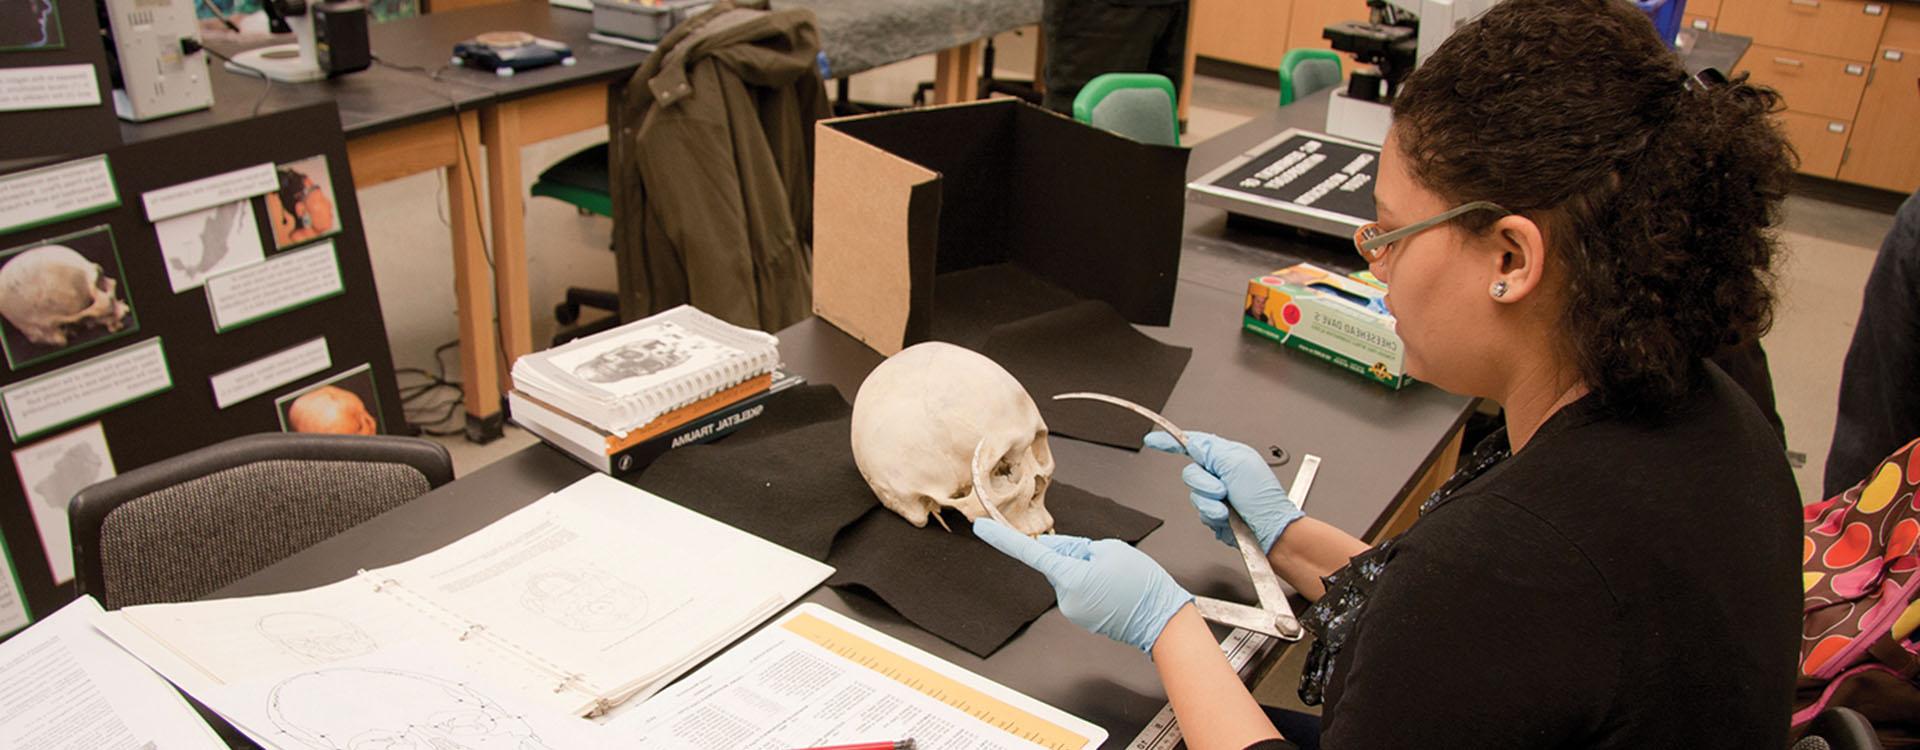 WLC student measuring skull in lab